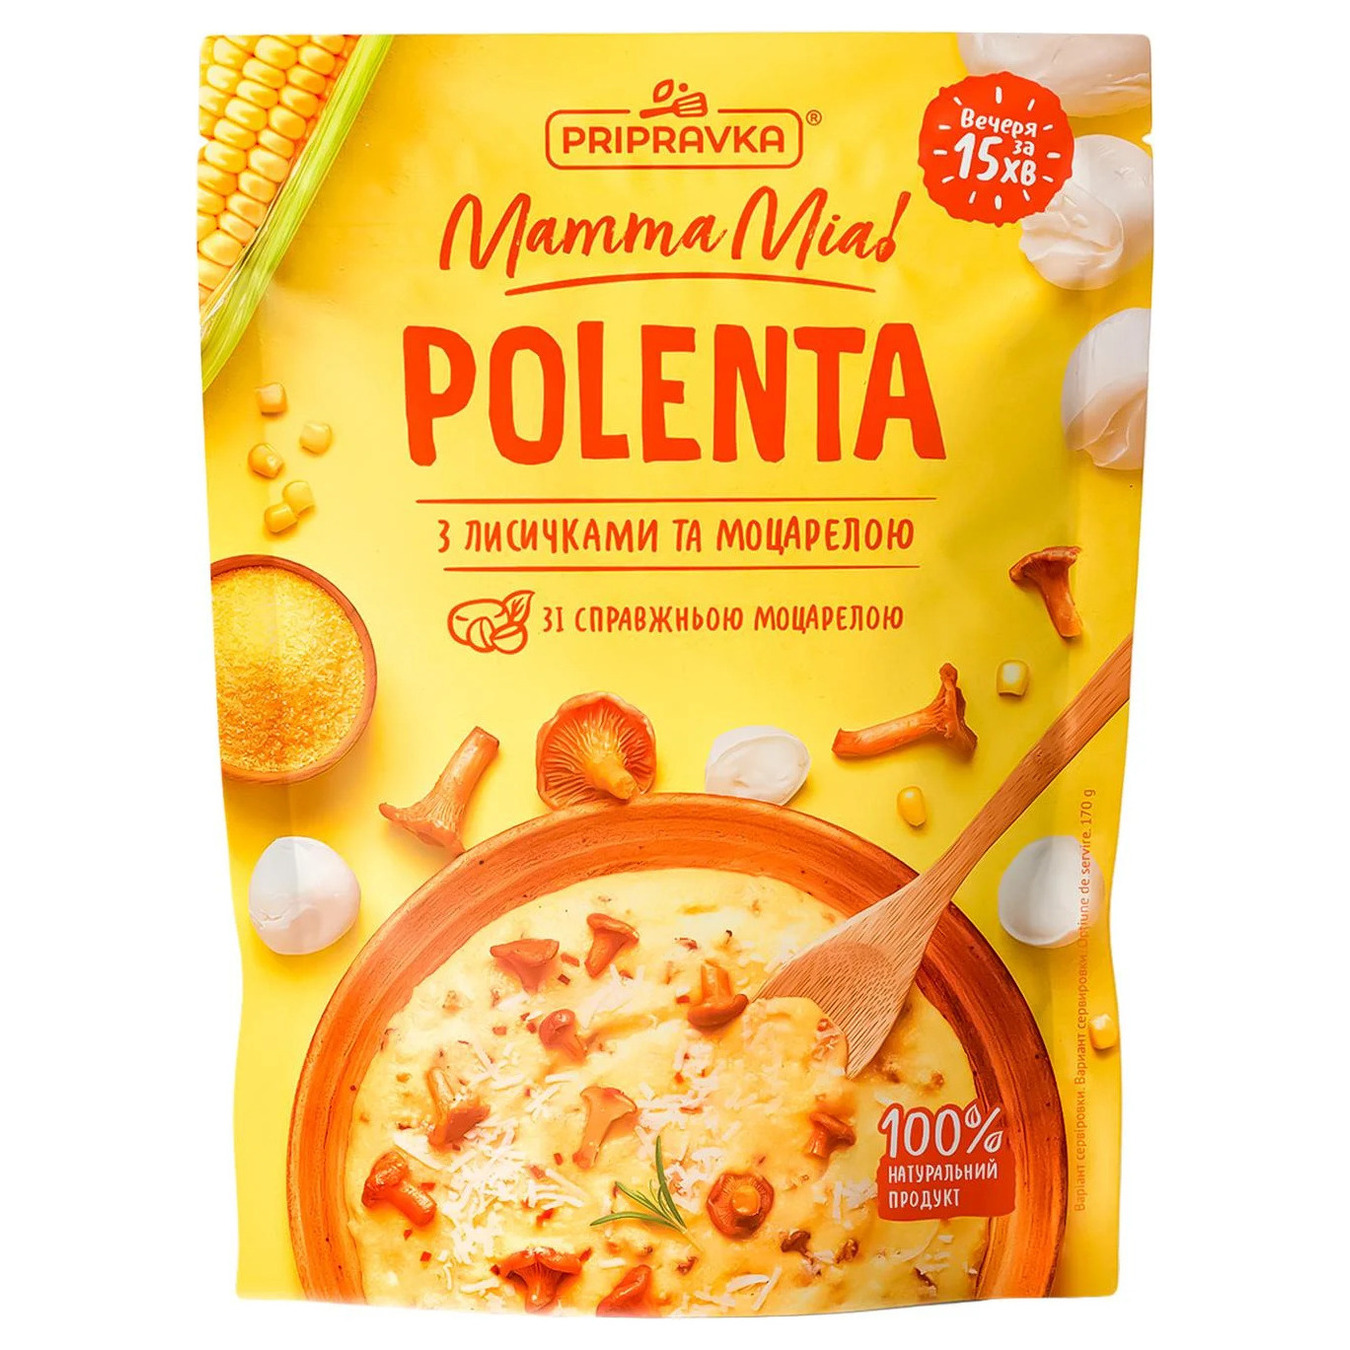 Polenta seasoning mix with chanterelles and natural mozzarella 170g